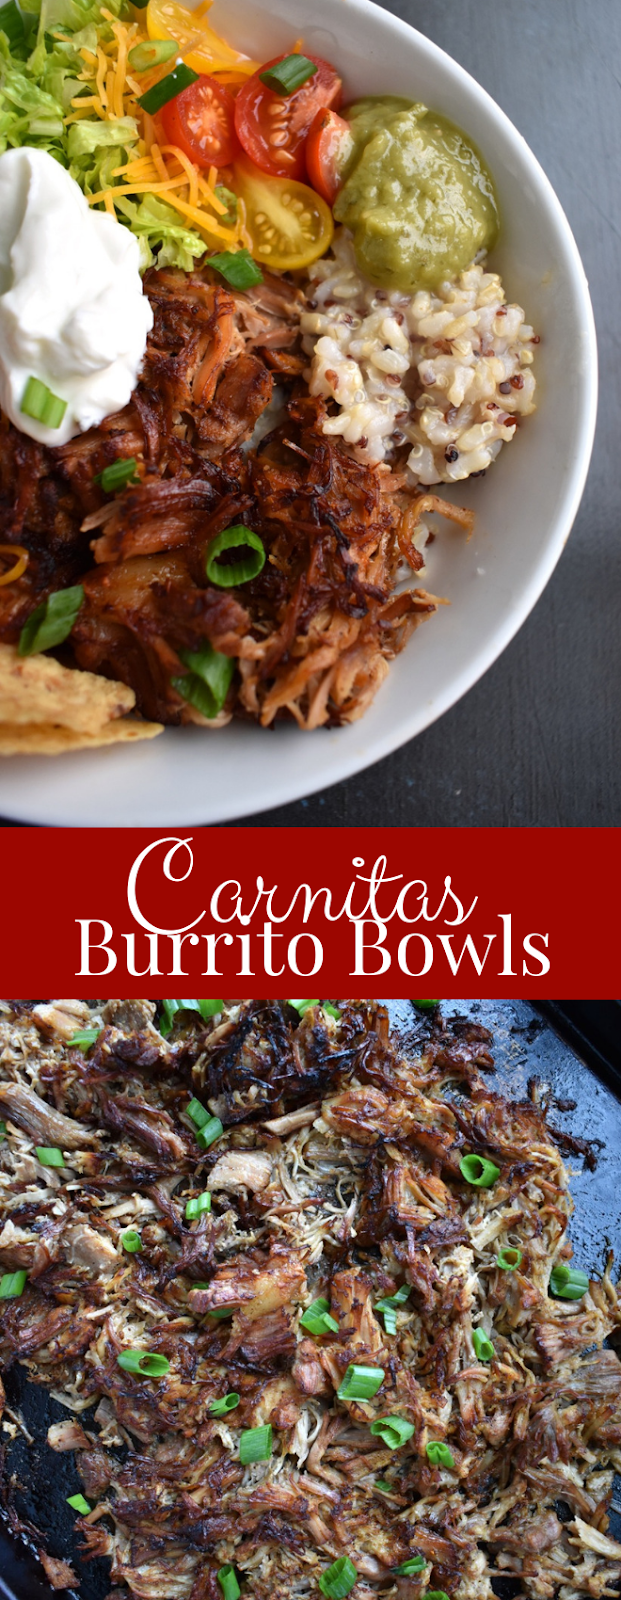 Carnitas Burrito Bowls